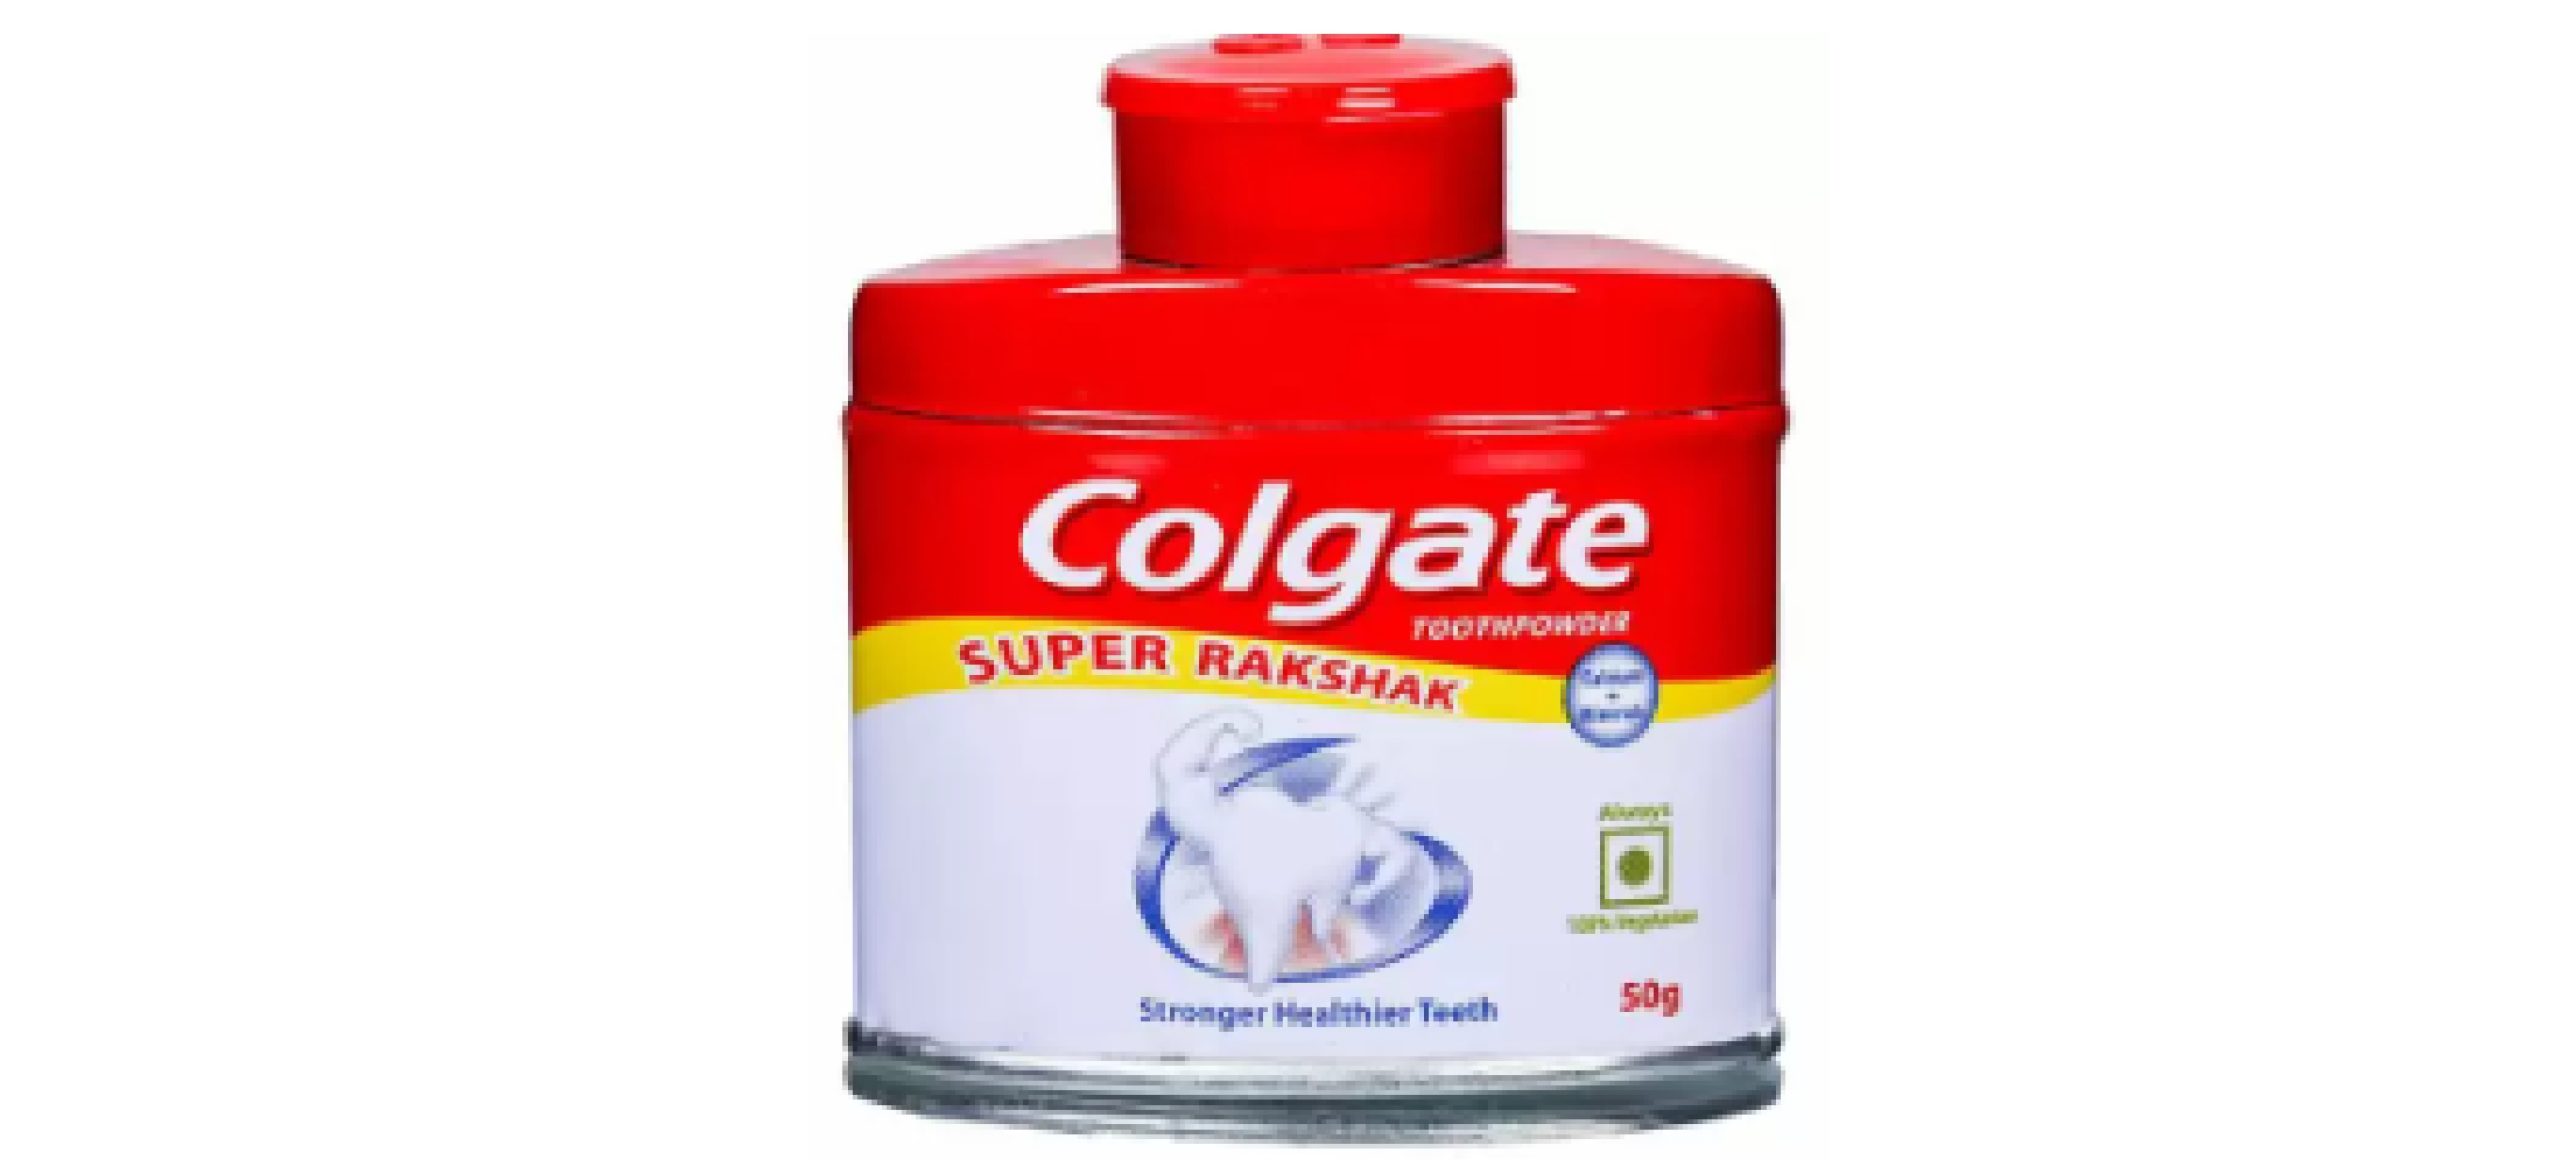 Colgate Tooth powder -50g